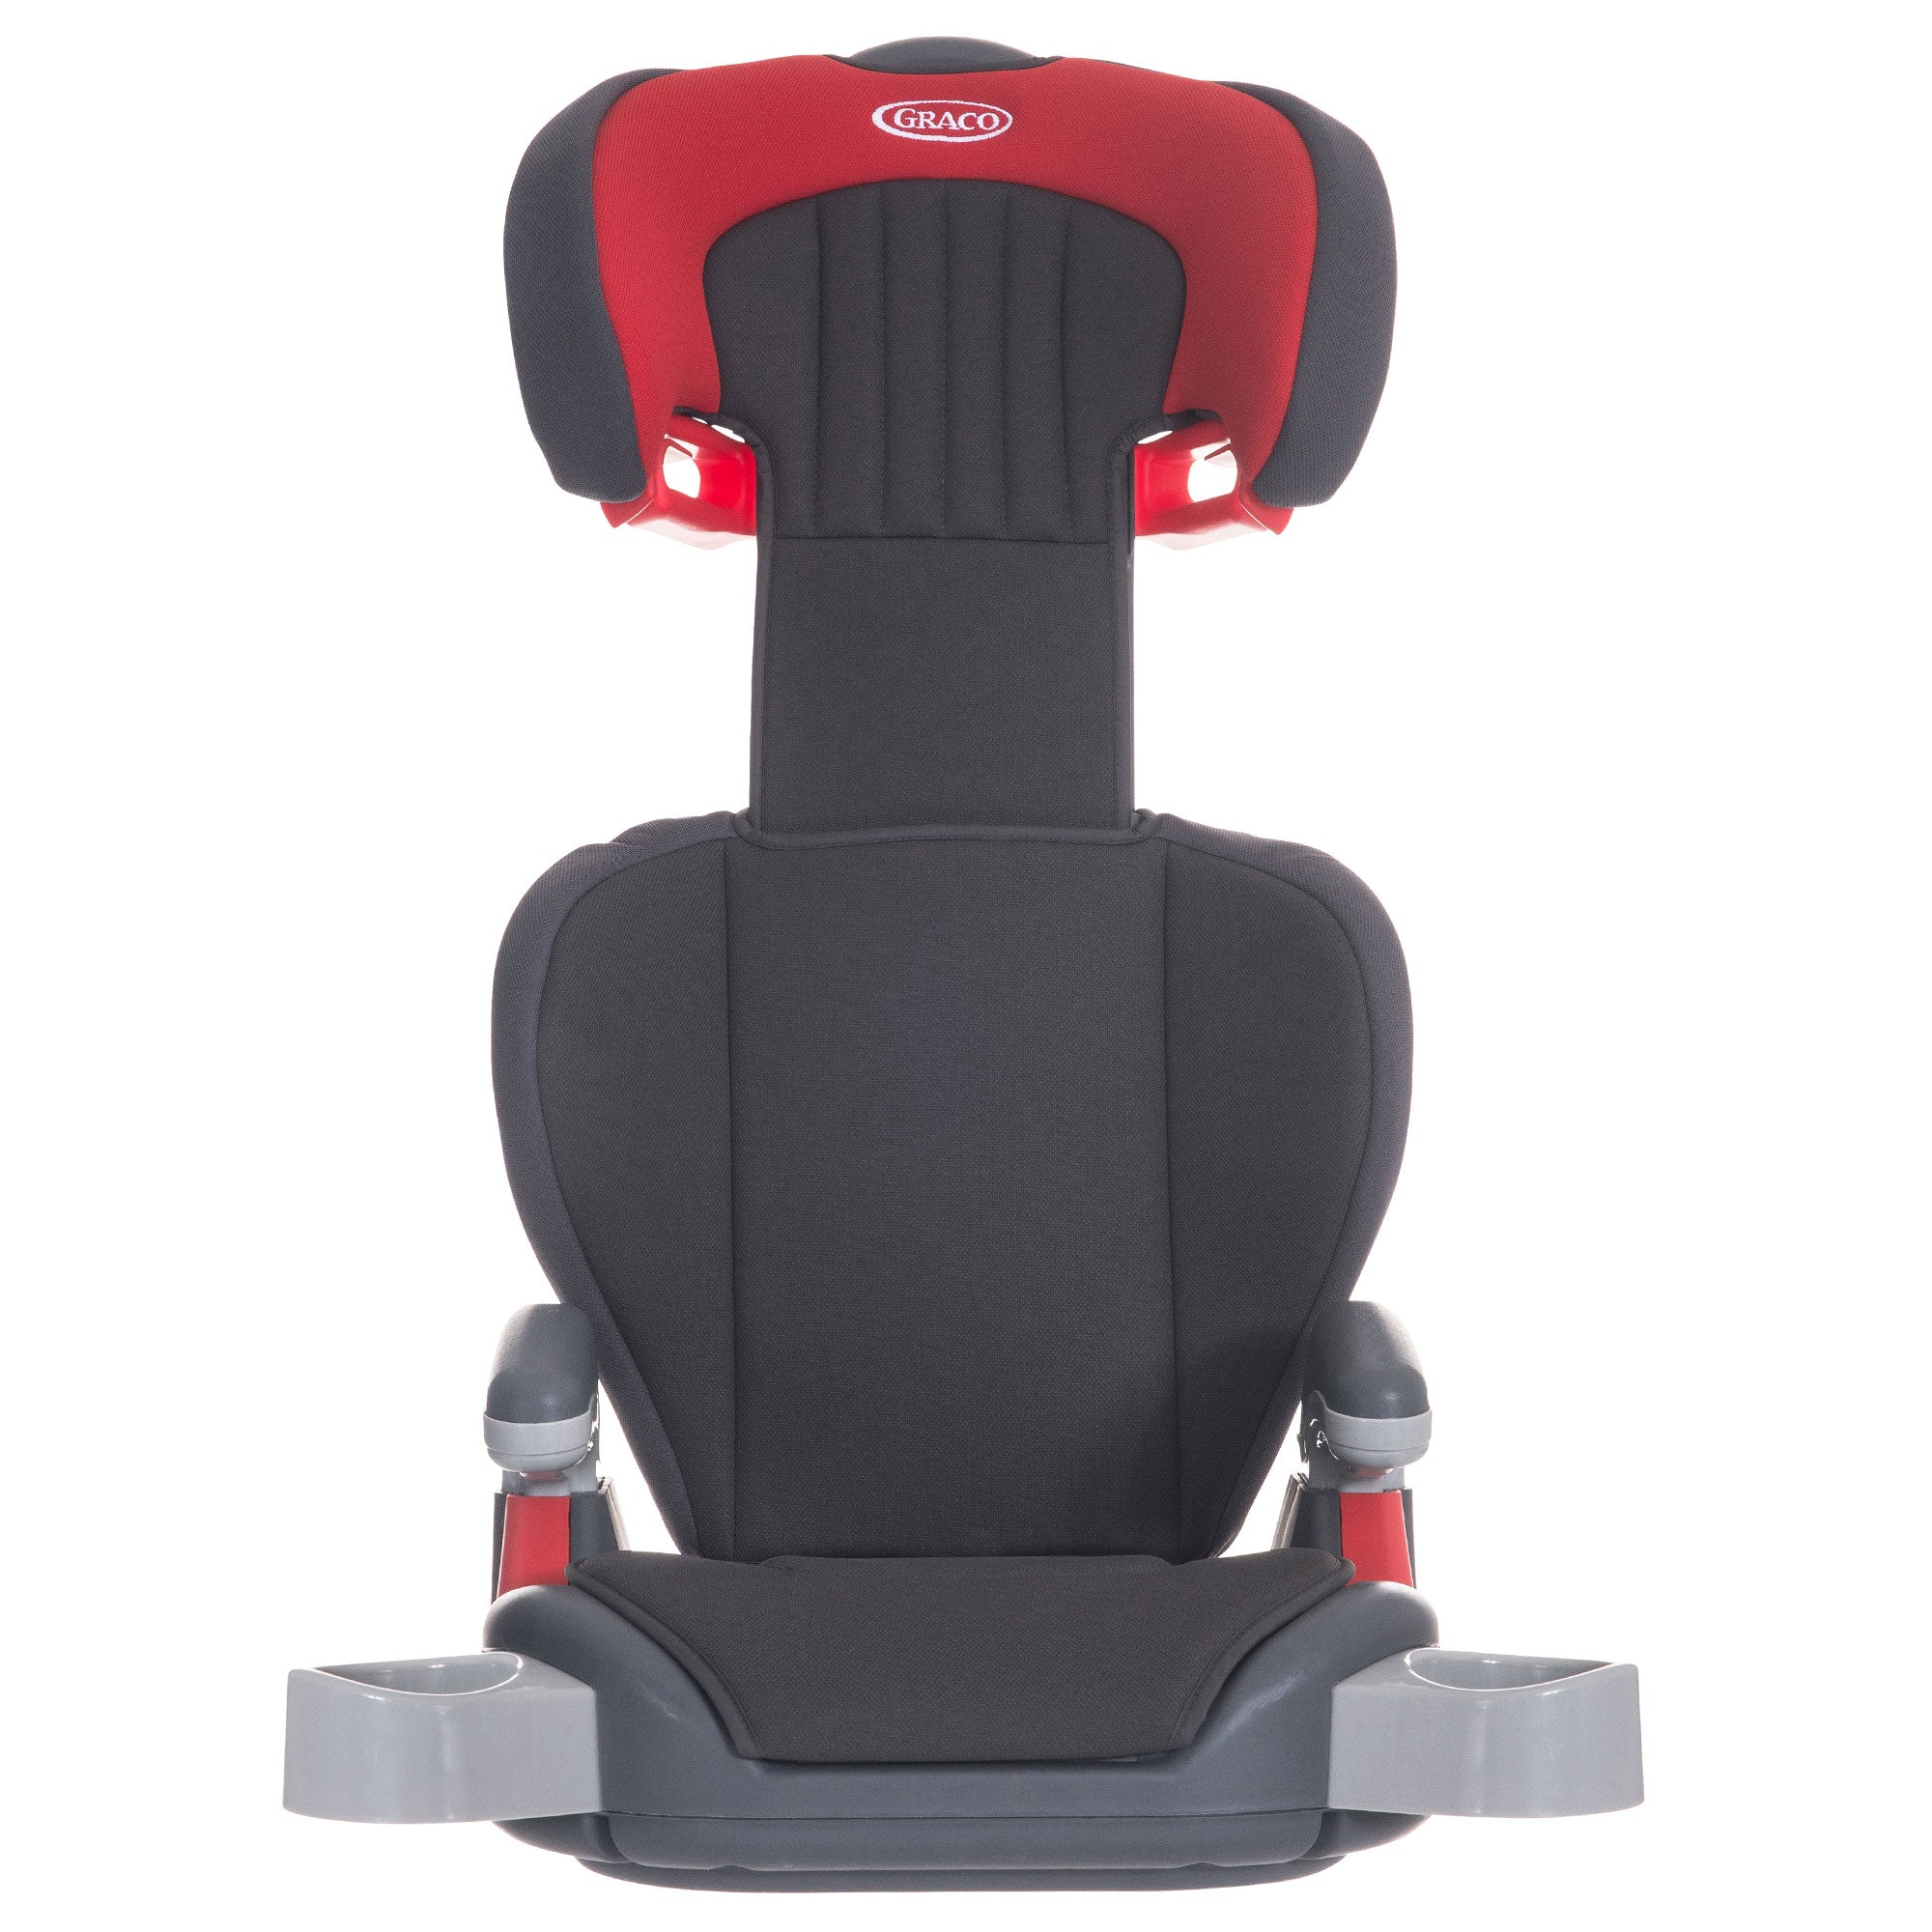 graco junior maxi lightweight highback booster car seat